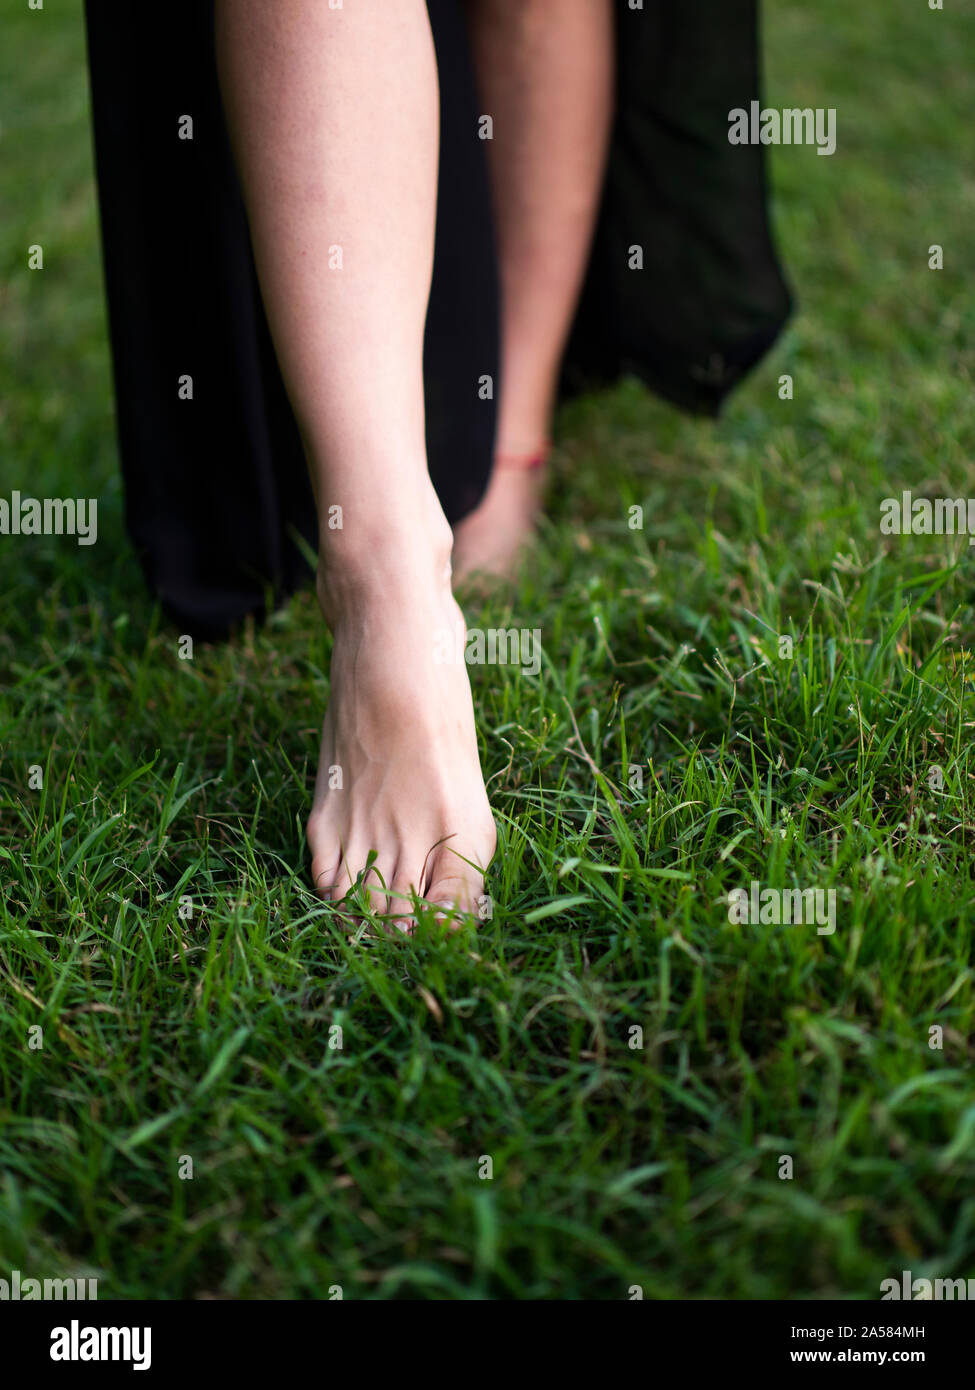 barefoot woman walking in grass Stock Photo